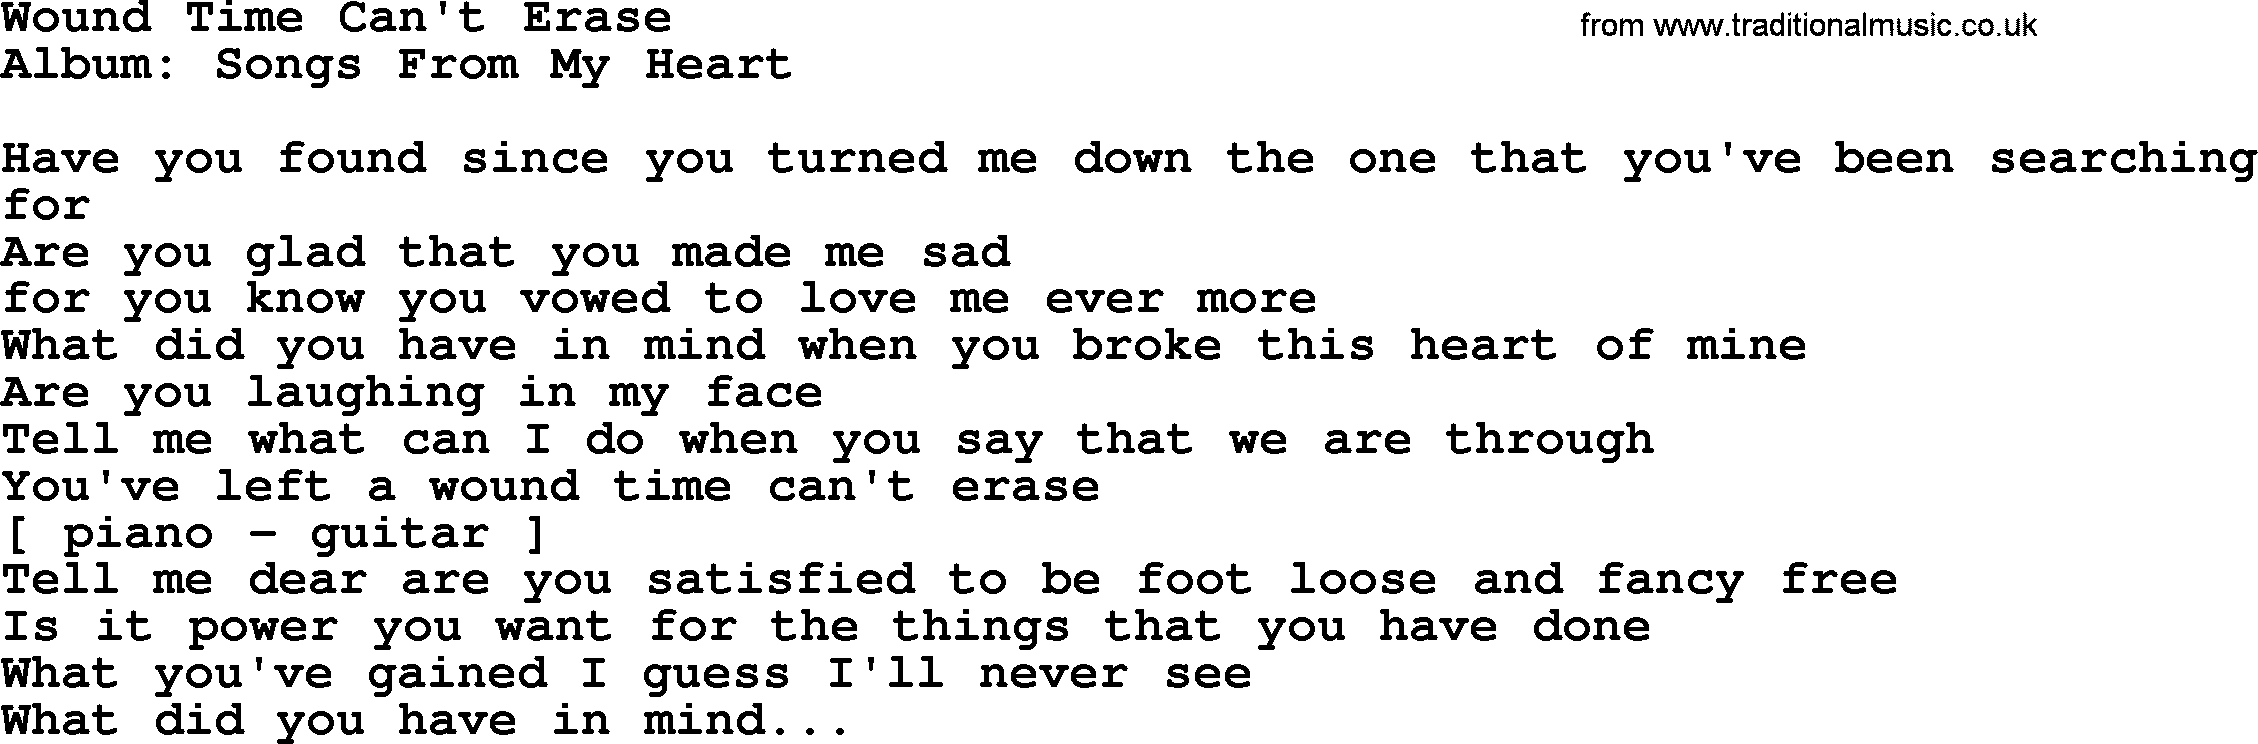 Loretta Lynn song: Wound Time Can't Erase lyrics